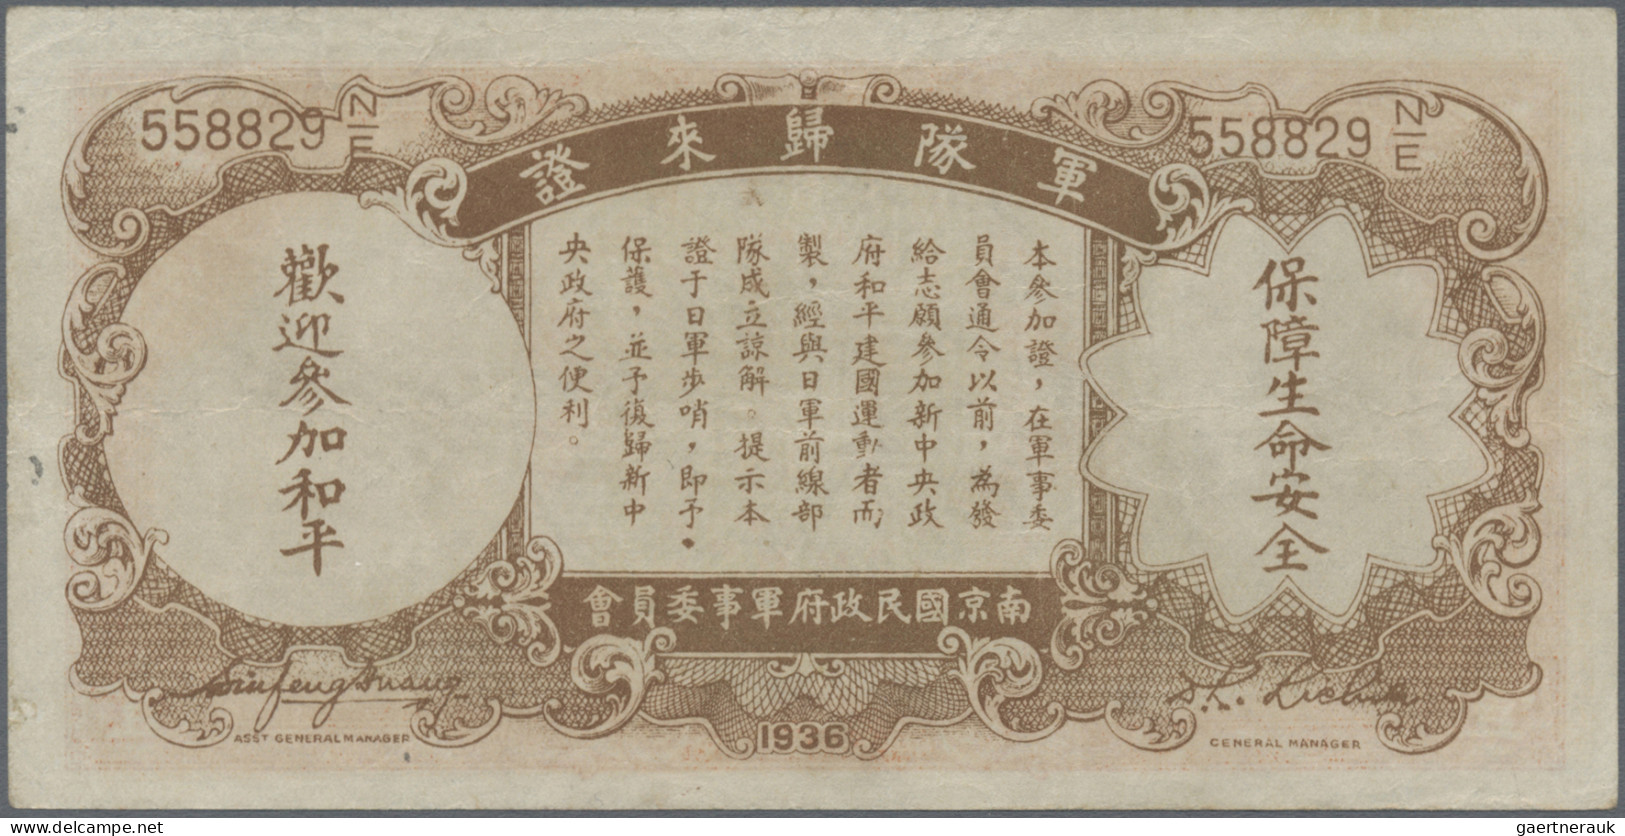 China: Central Bank Of China – Pass For Nanking Military Government, 1 Yuan 1936 - Chine